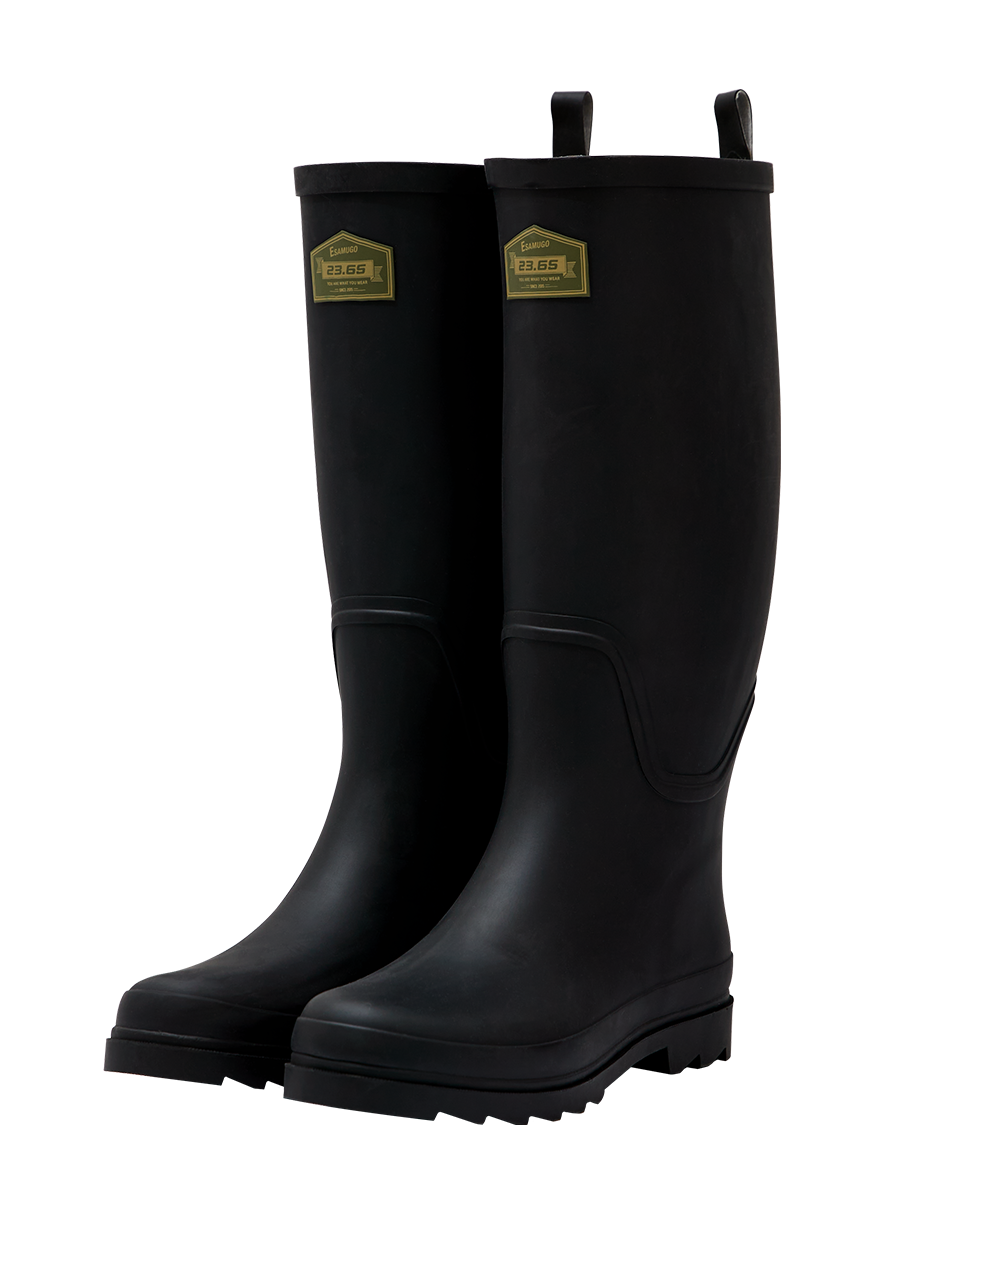 23.65 Rain Boots Black